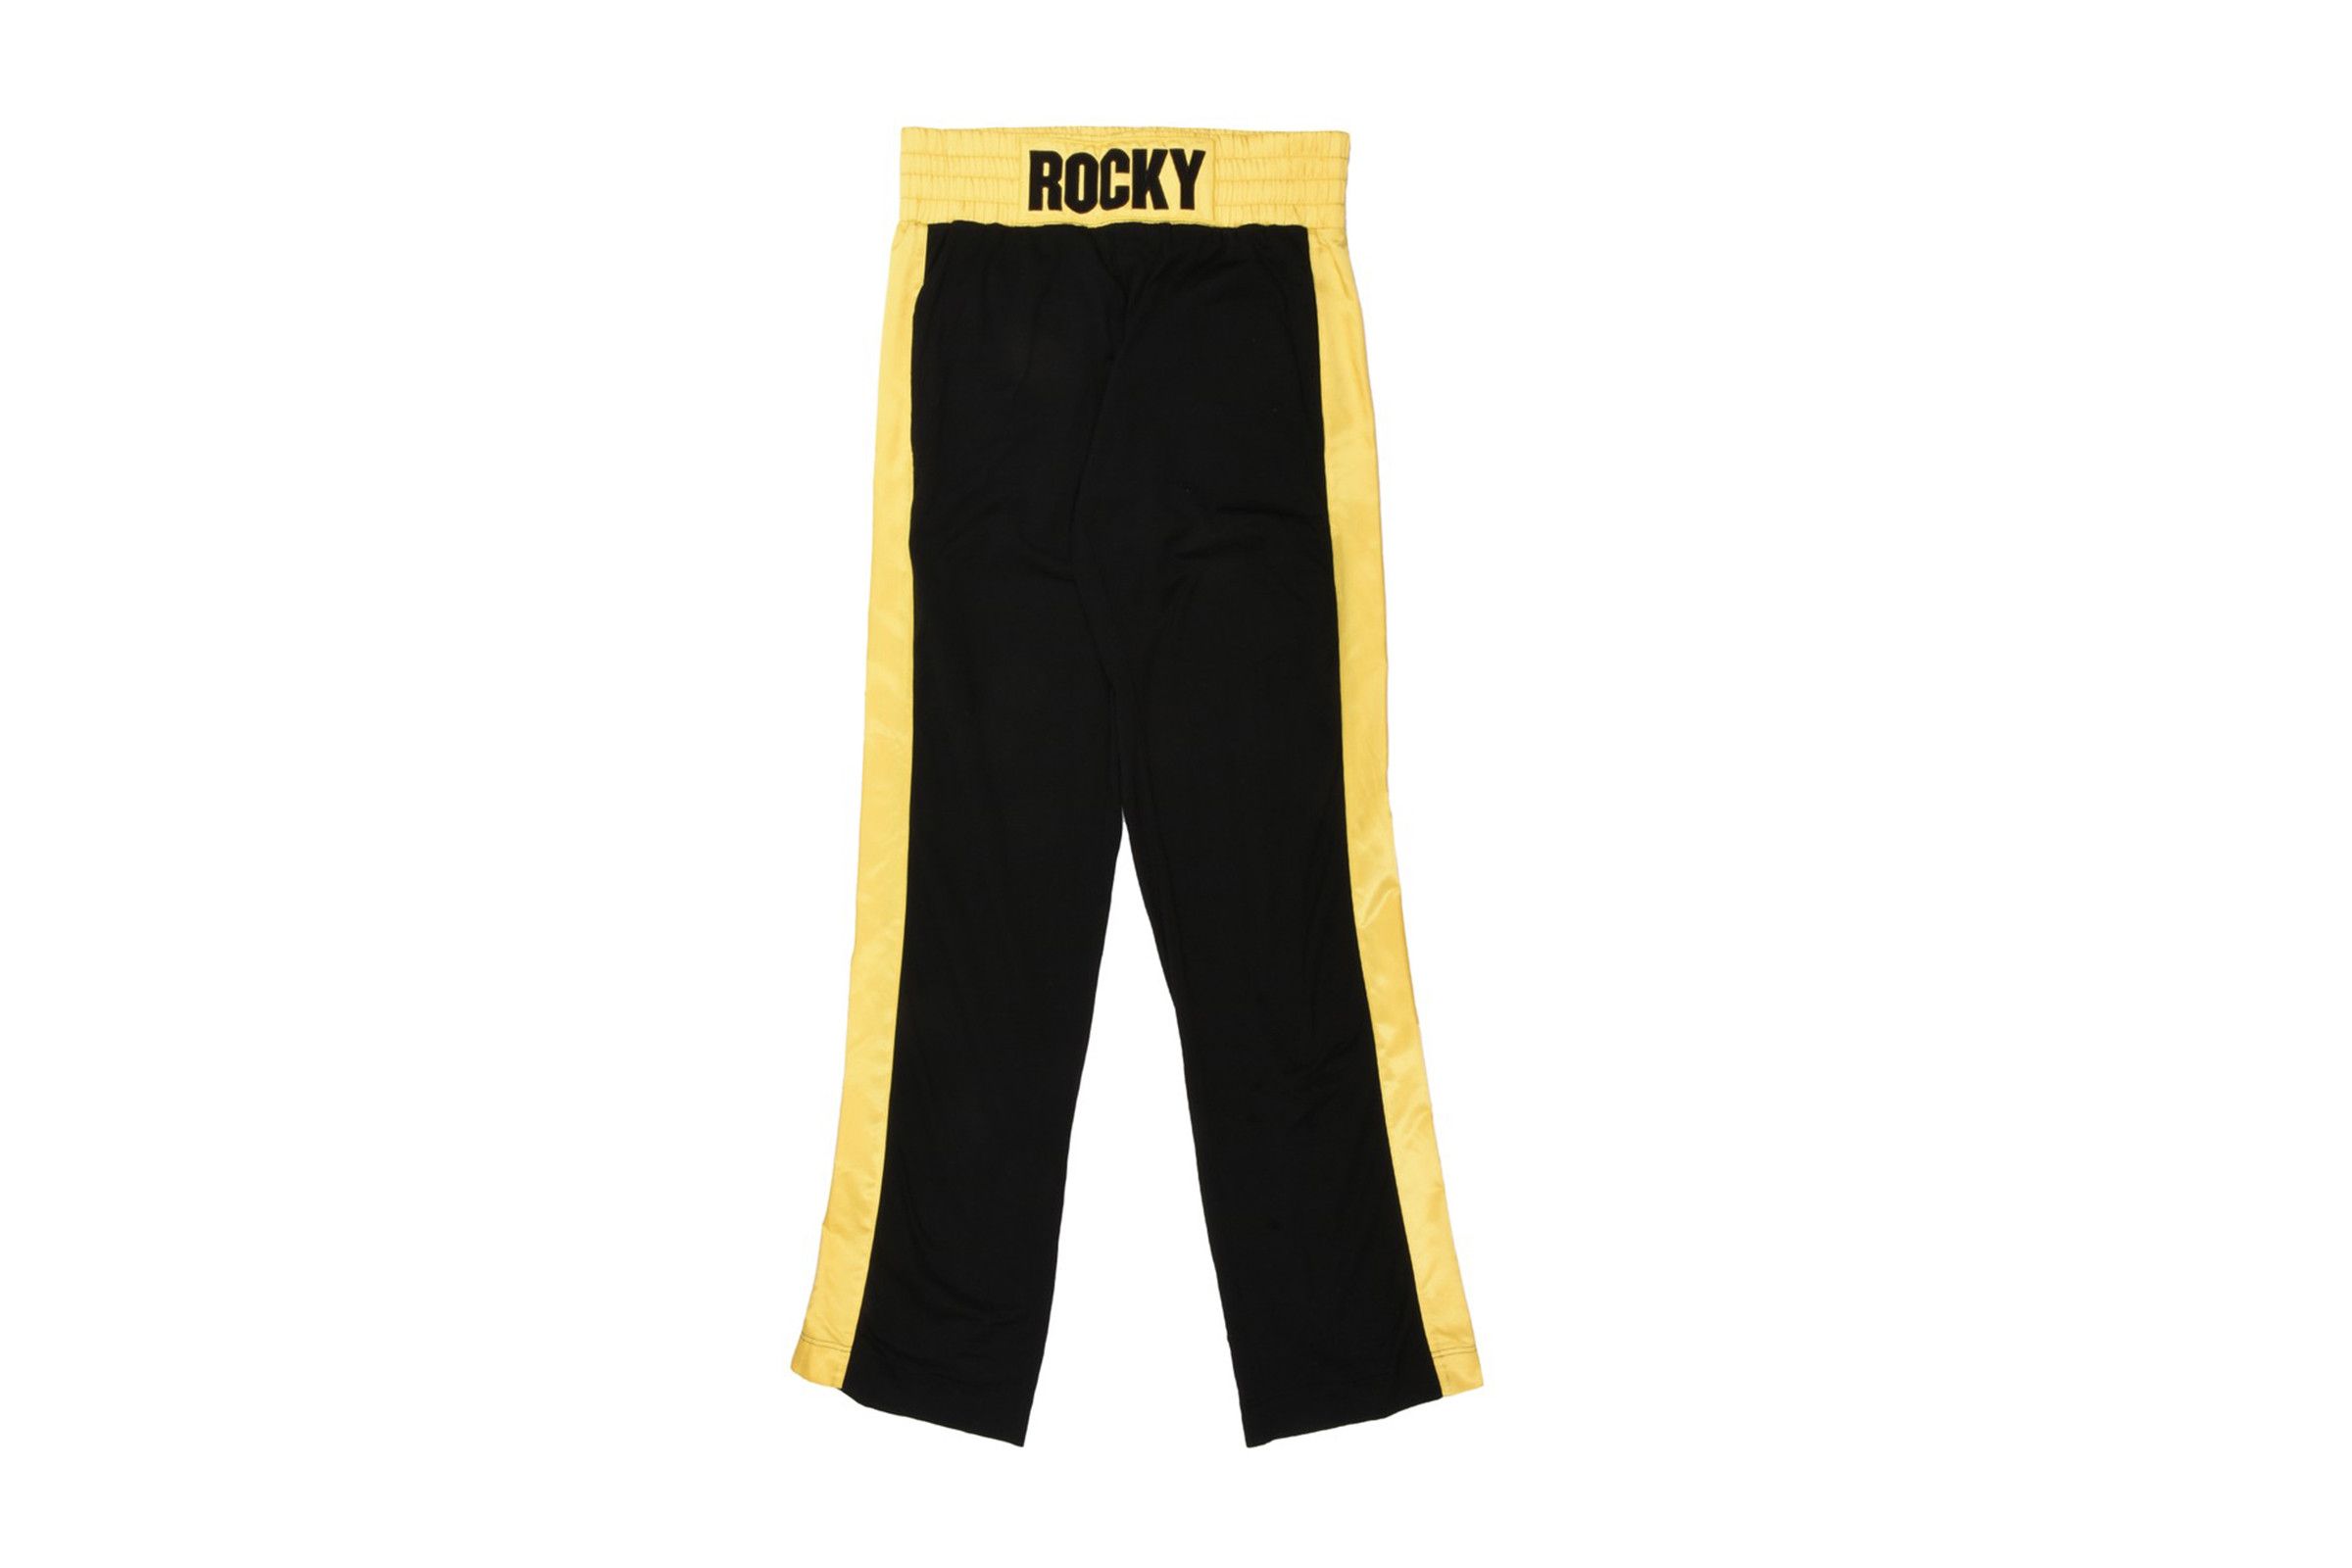 2. “Rocky” Training Pants